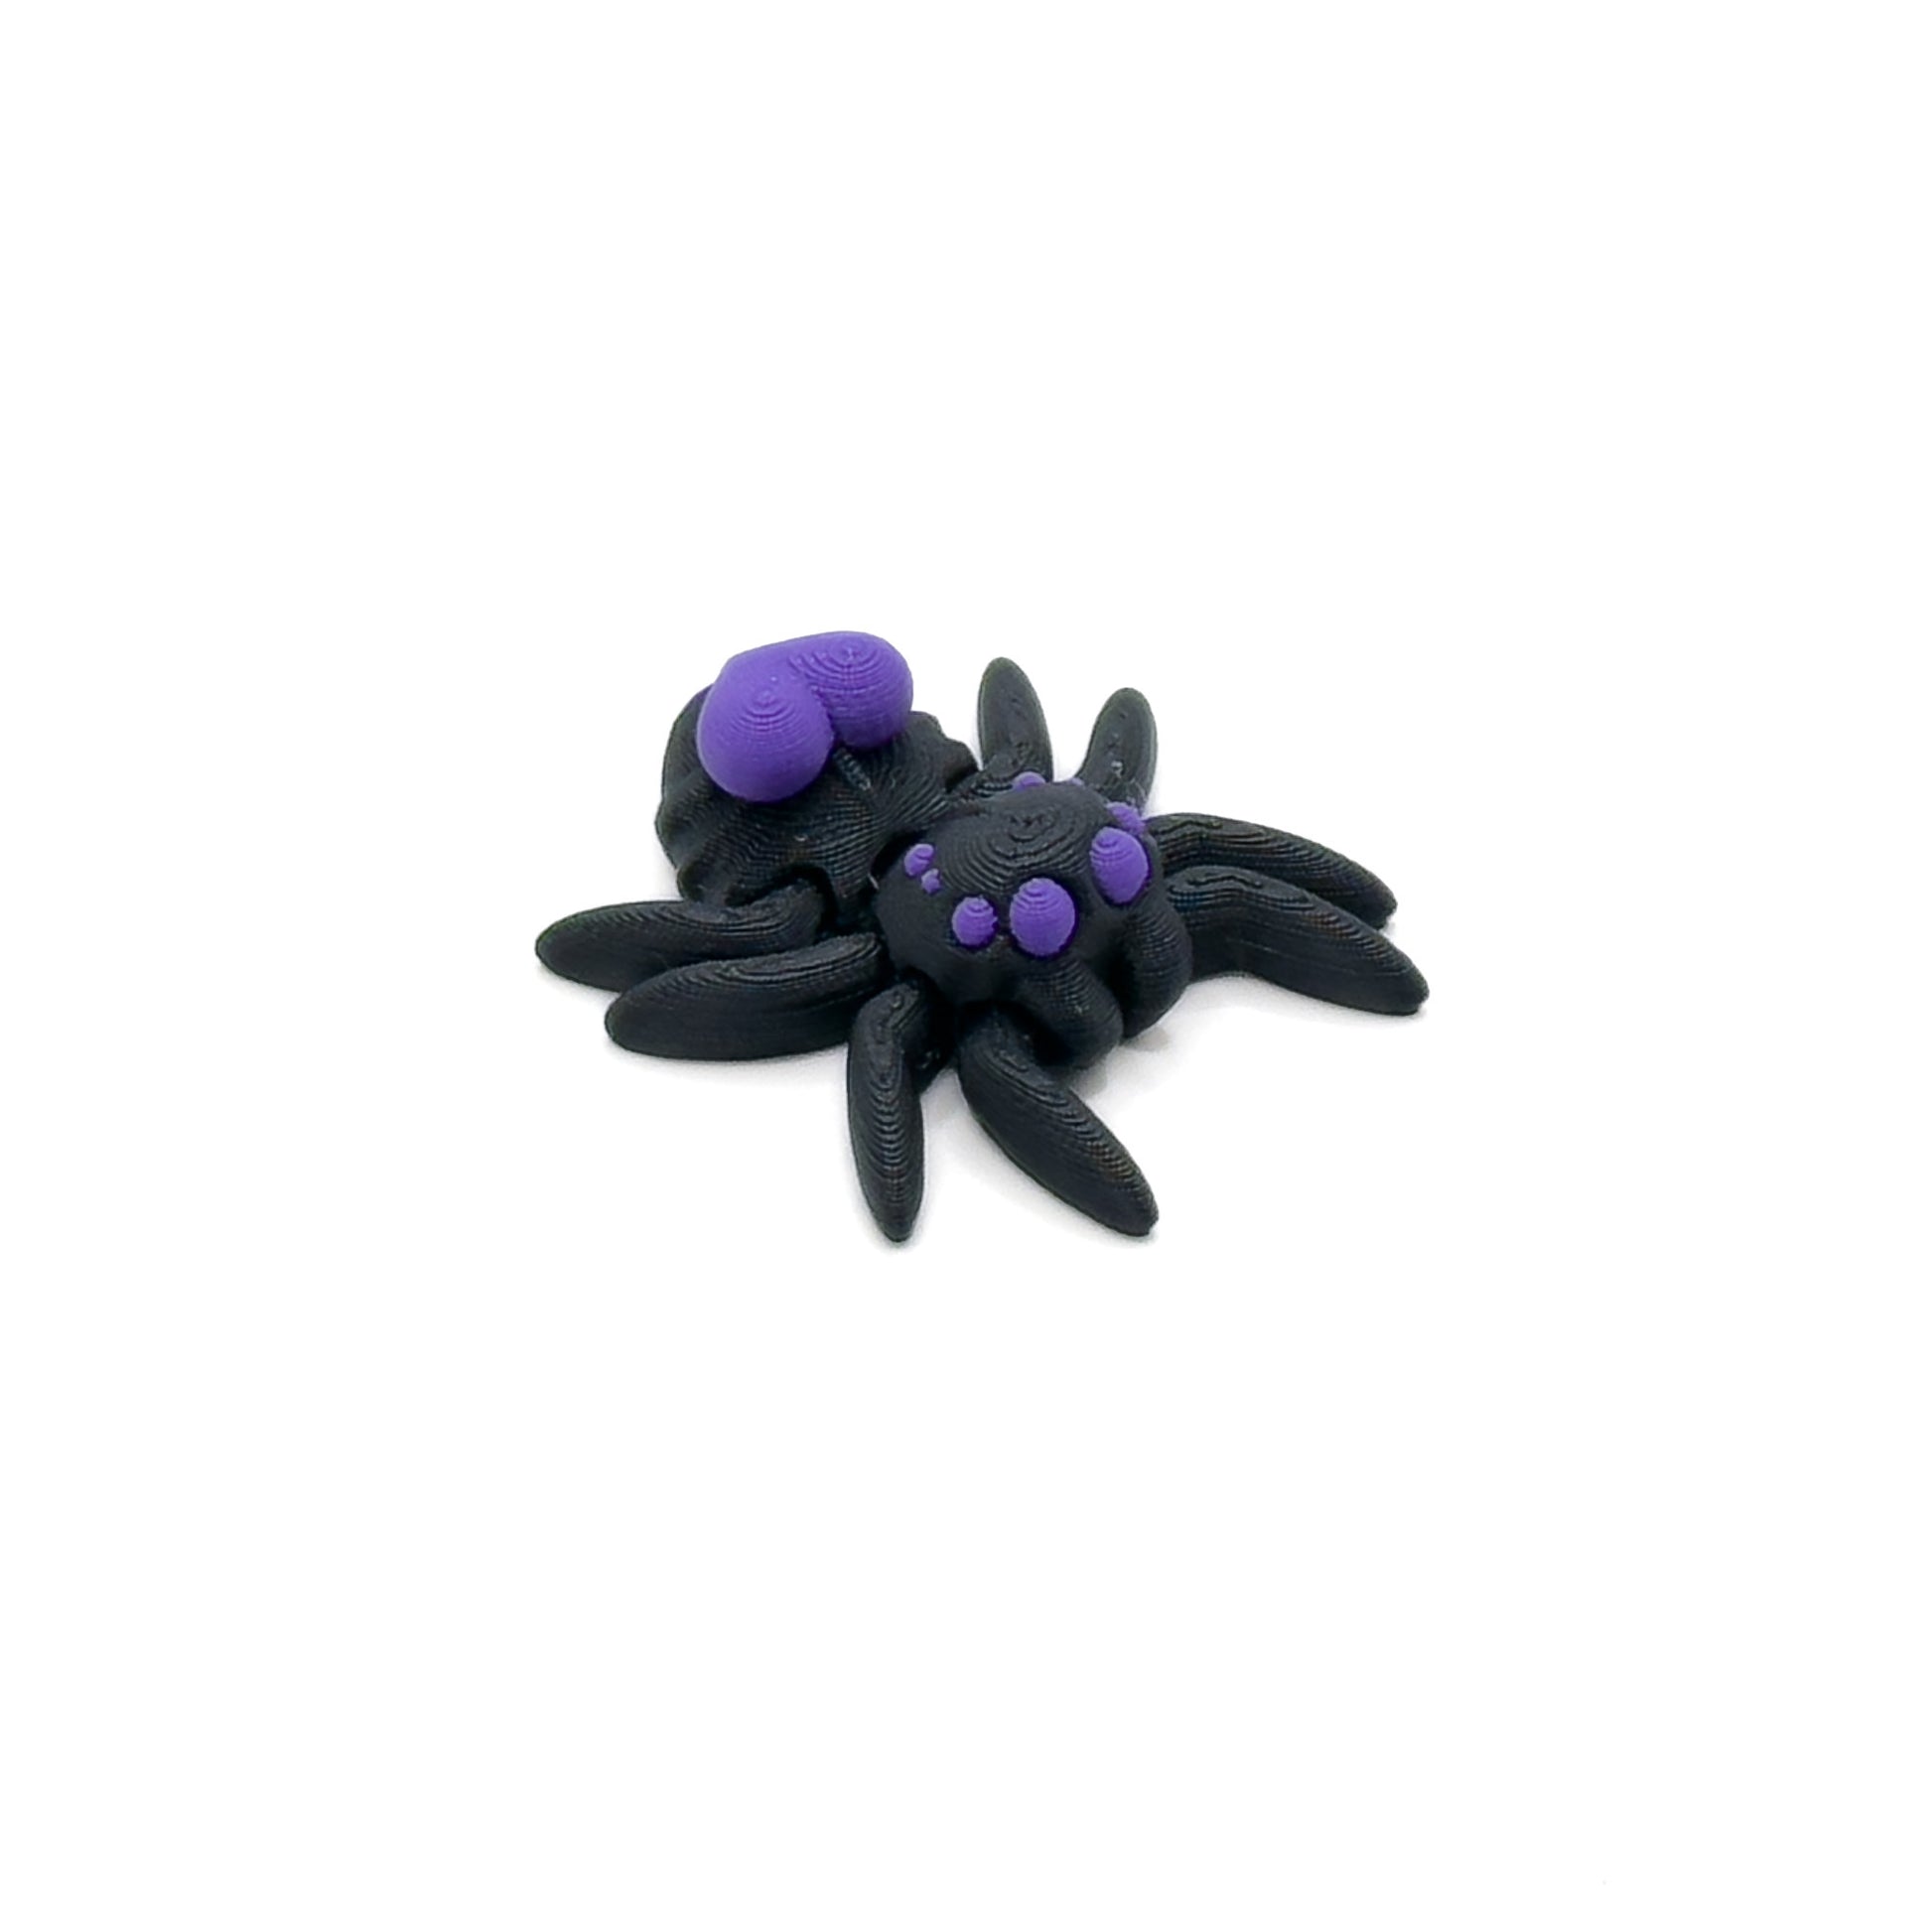 Tiny Heart Spider, Black/Purple